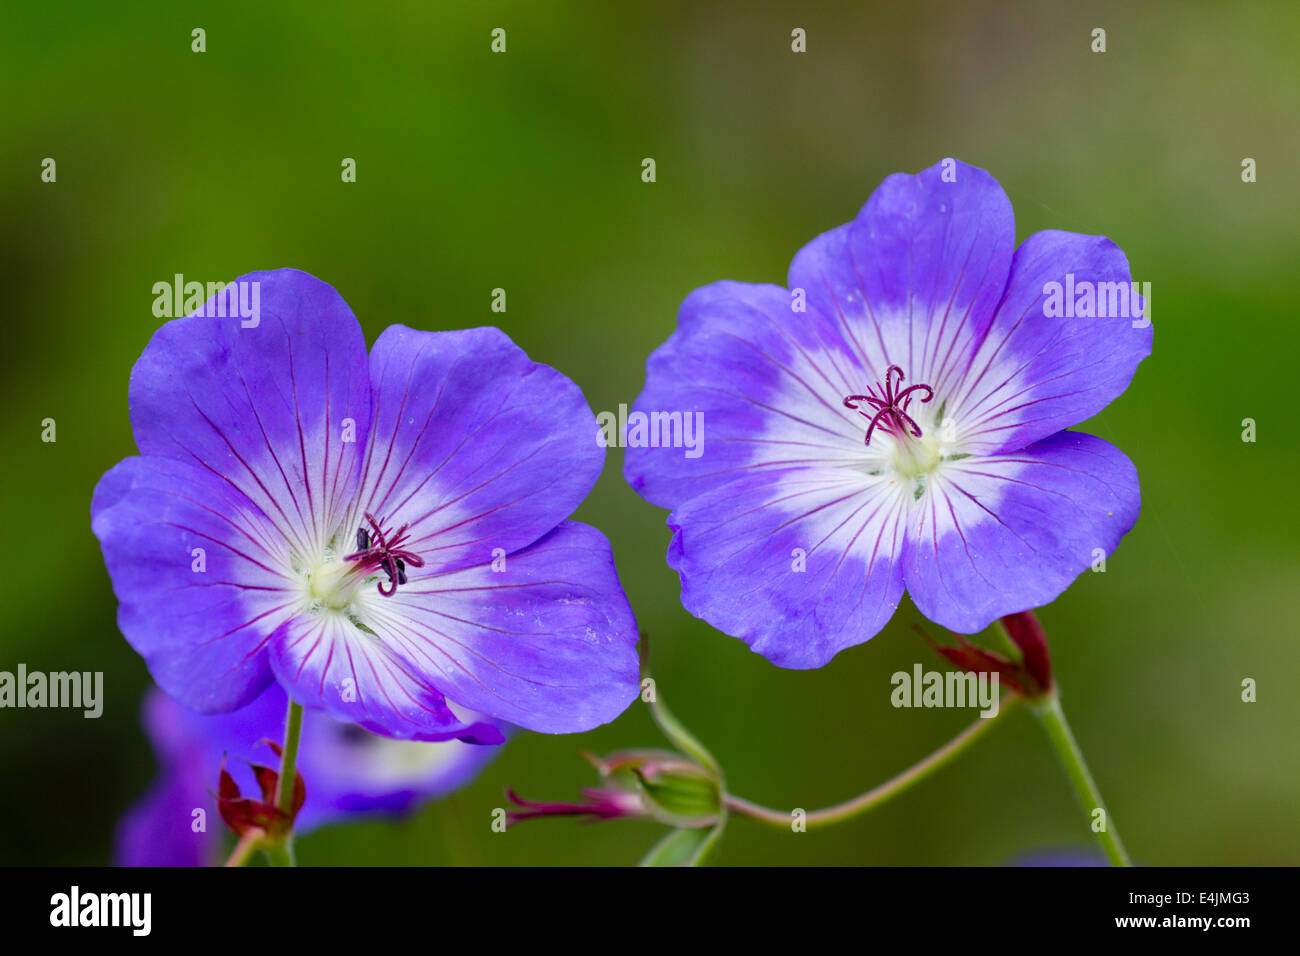 Flowers of the hardy geranium, Geranium 'Rozanne' Stock Photo